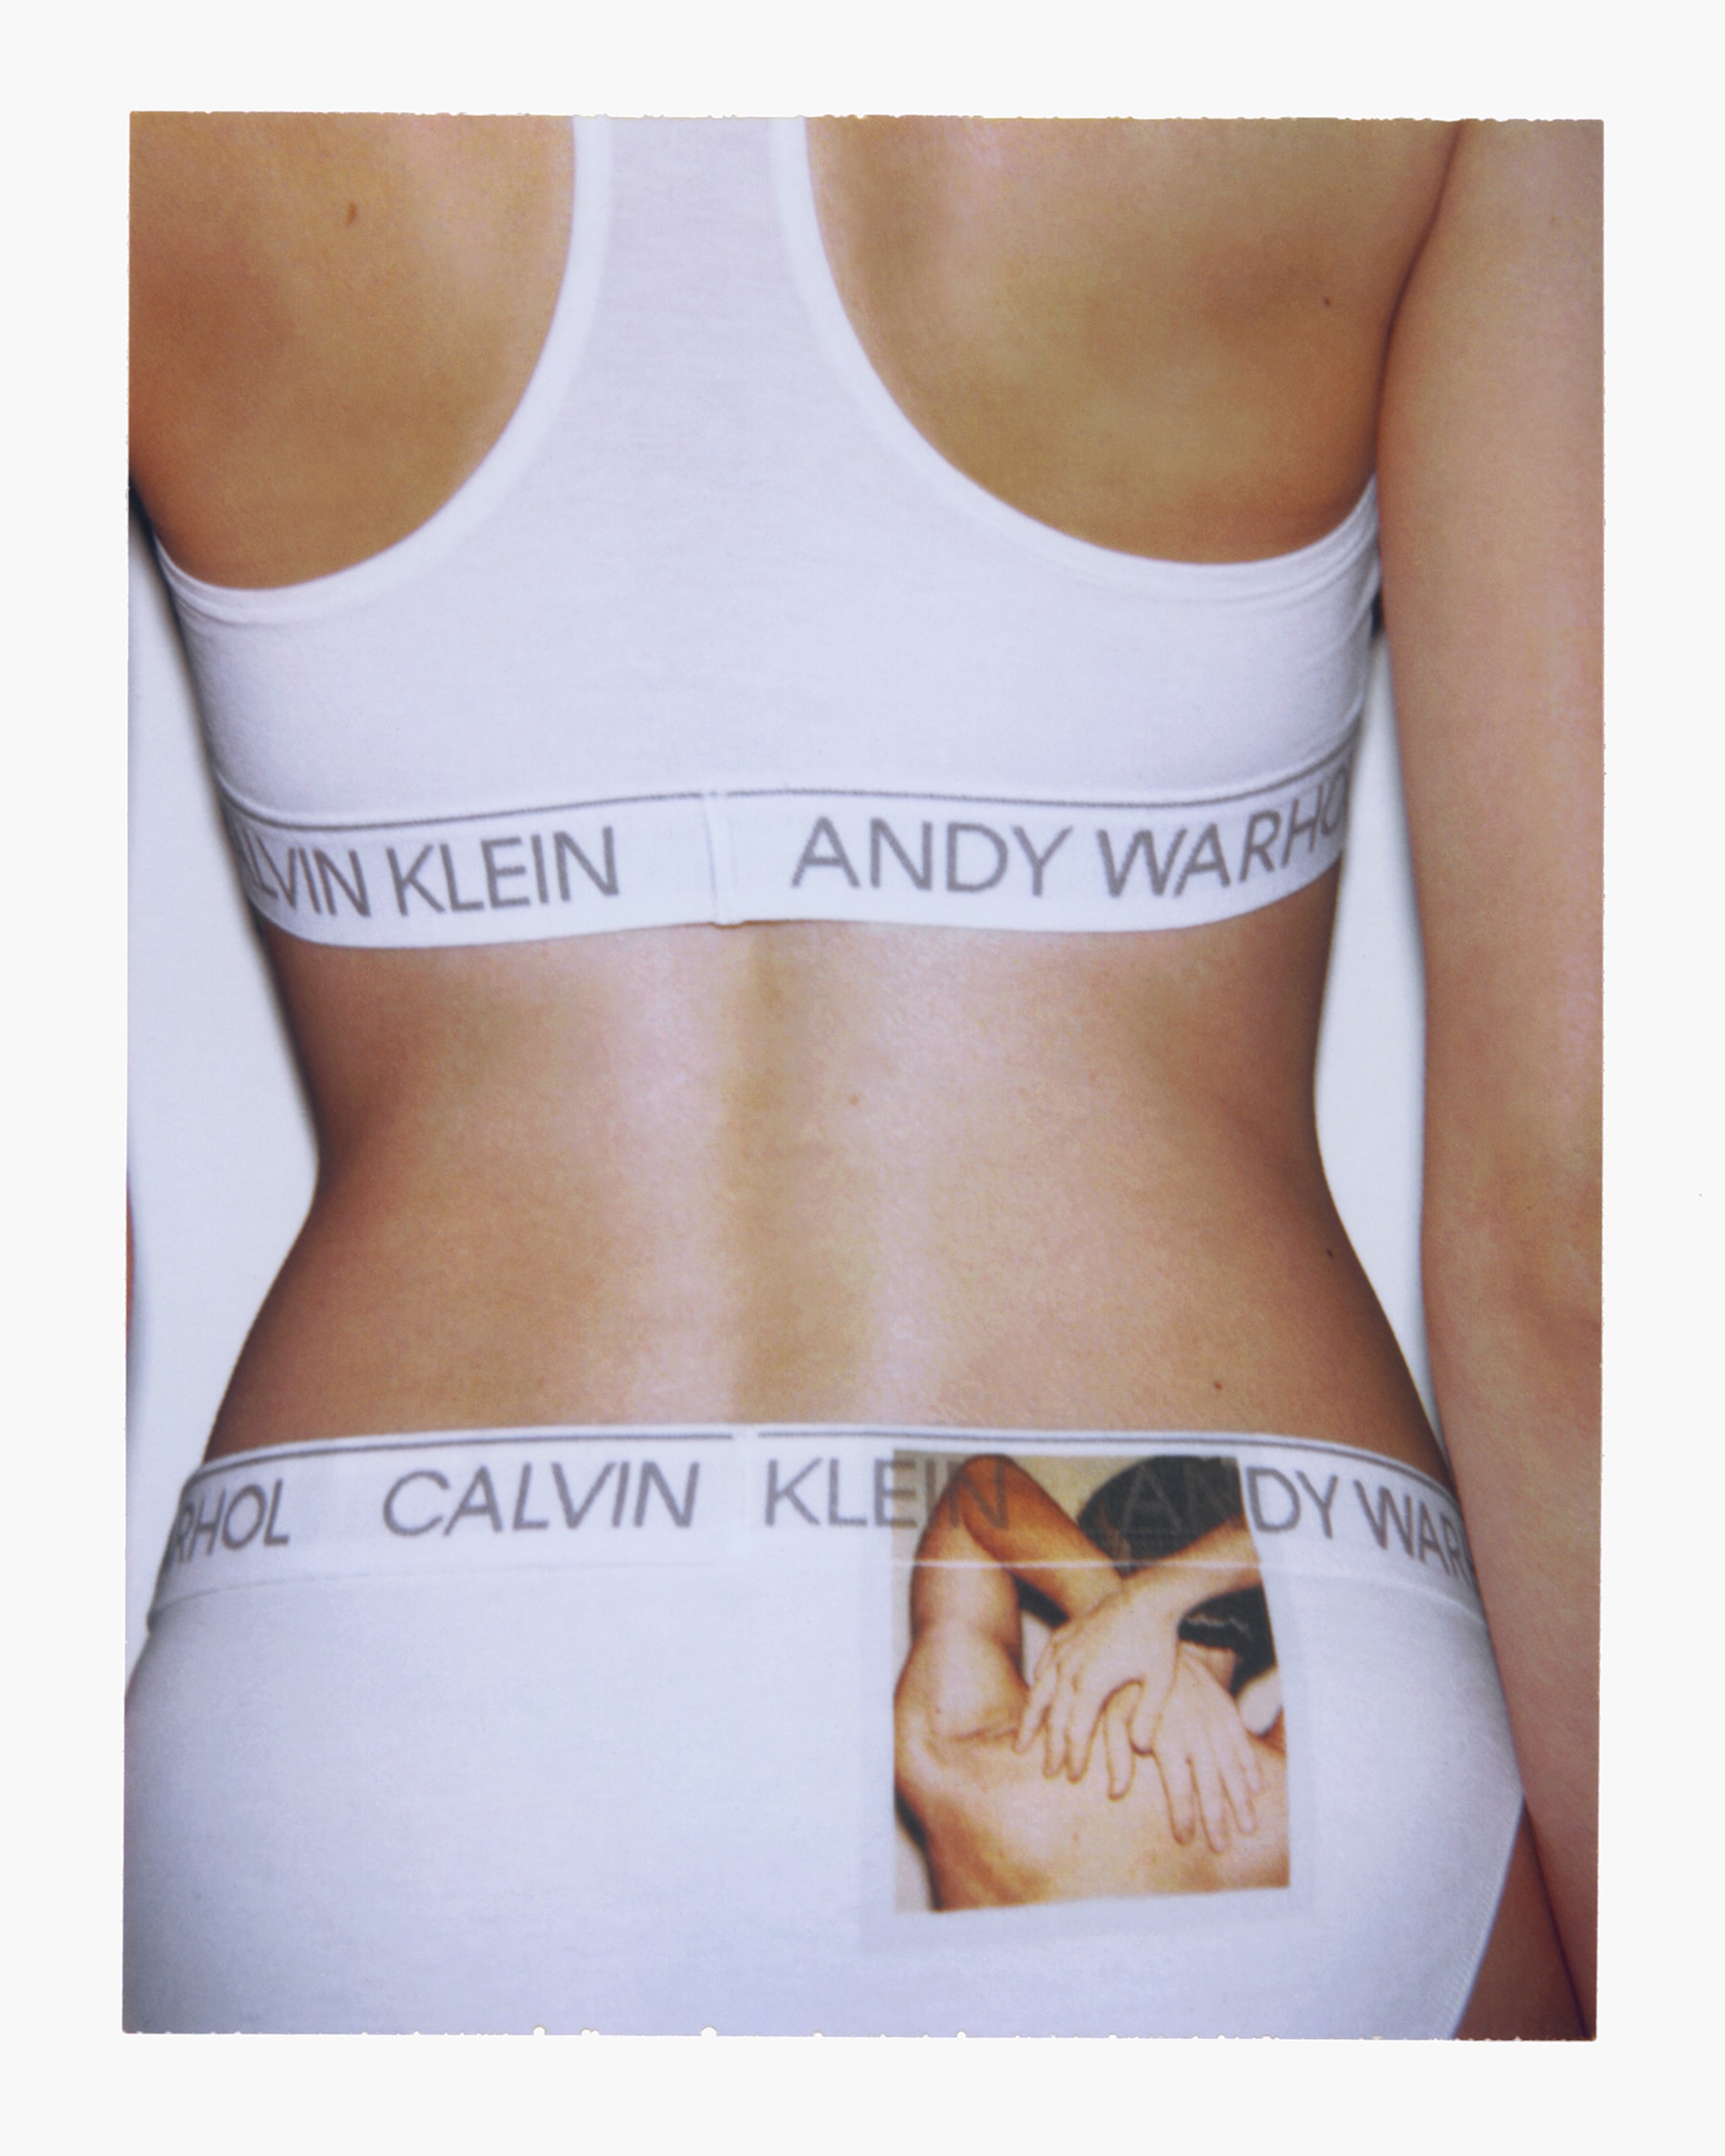 Calvin Klein 推出全新 Andy Warhol 主題內衣系列「Exposures, ’77-’85」